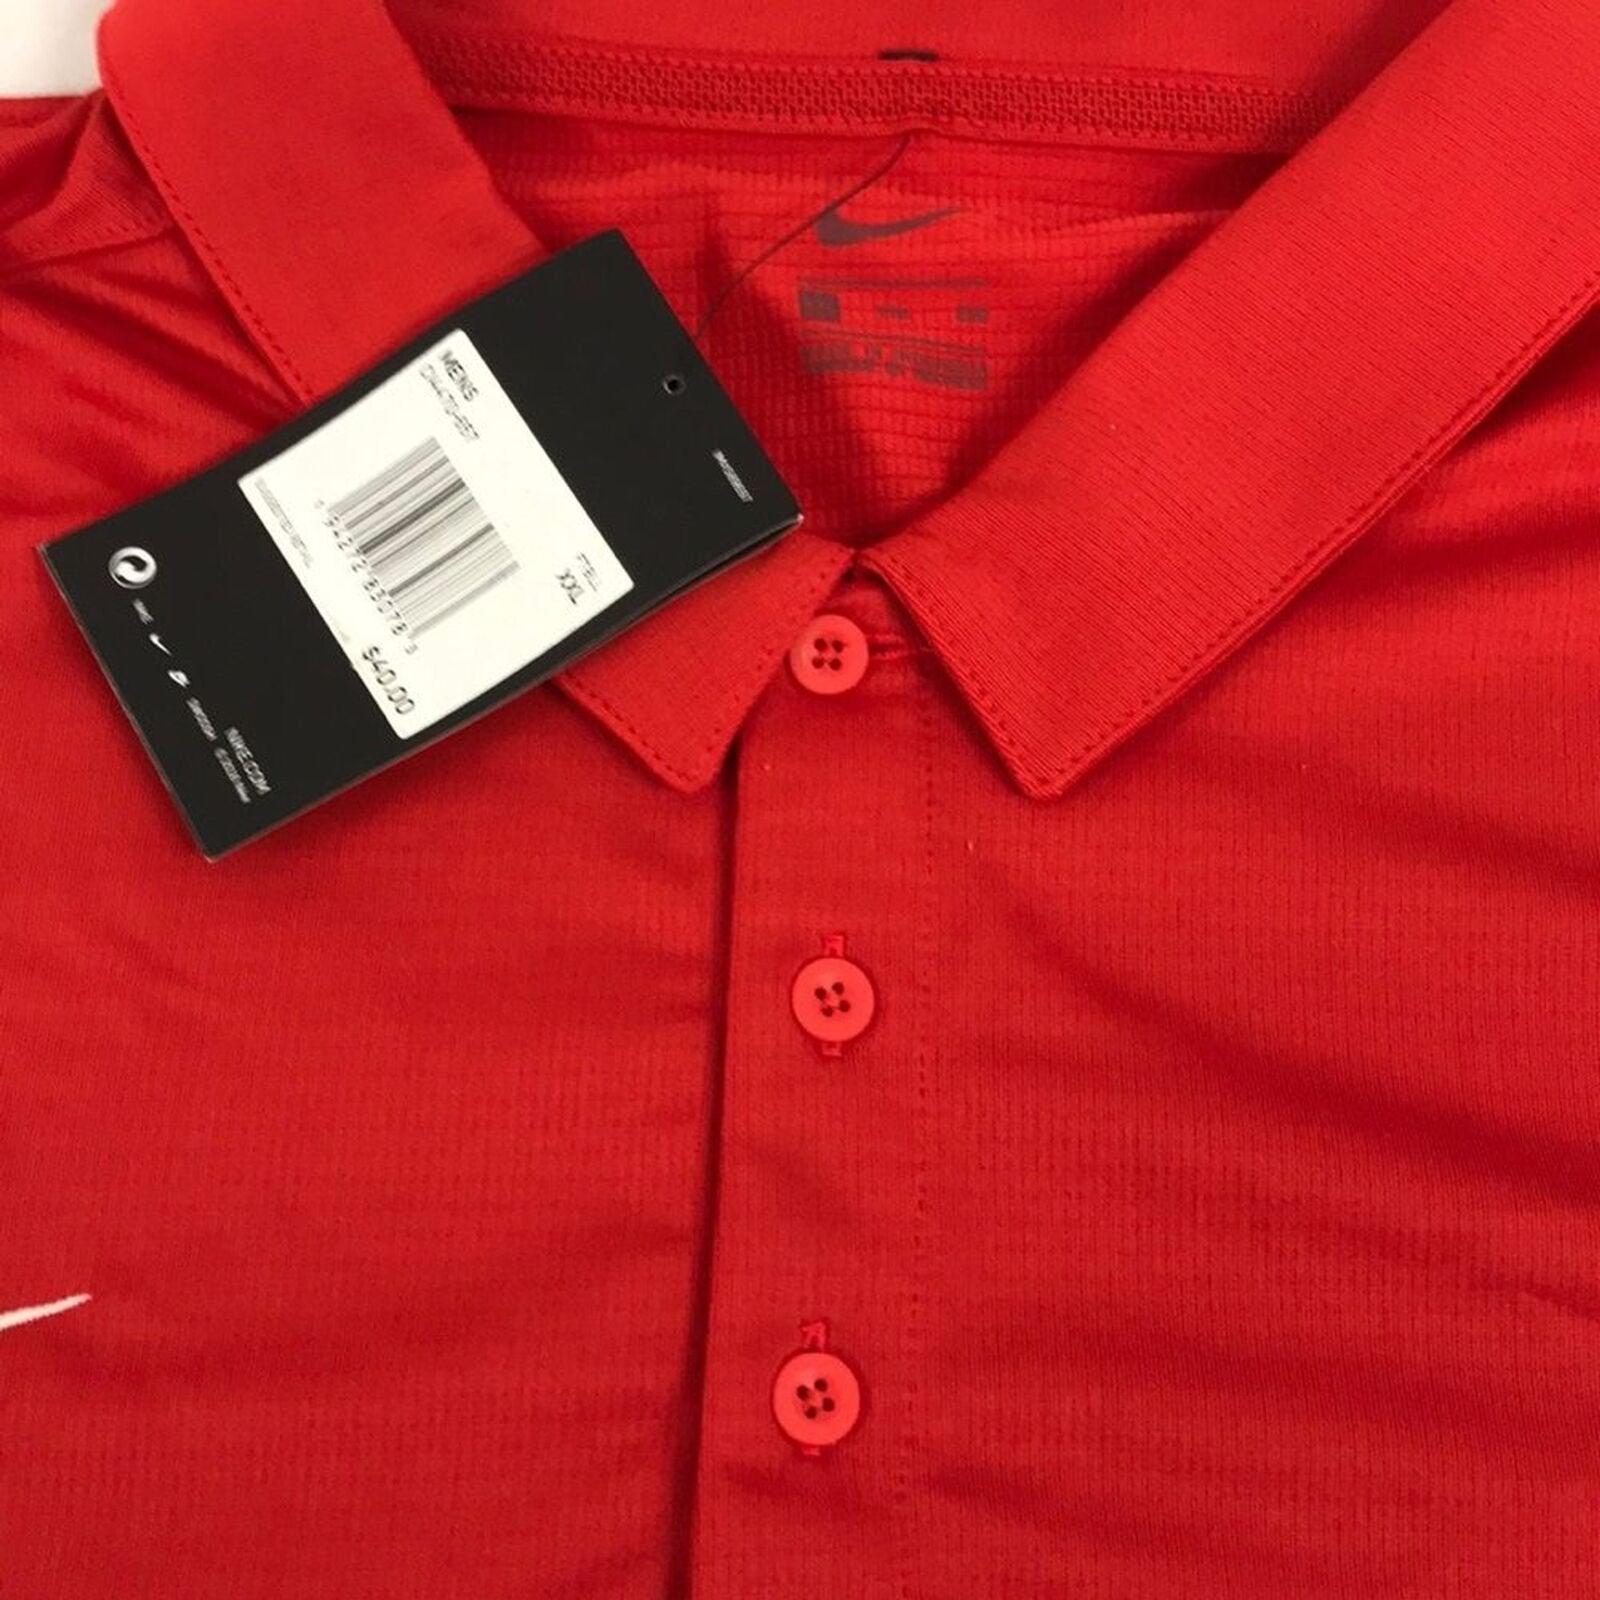 Nike Franchise Dri Fit Coach Polo Shirt Red Mens Size XXL